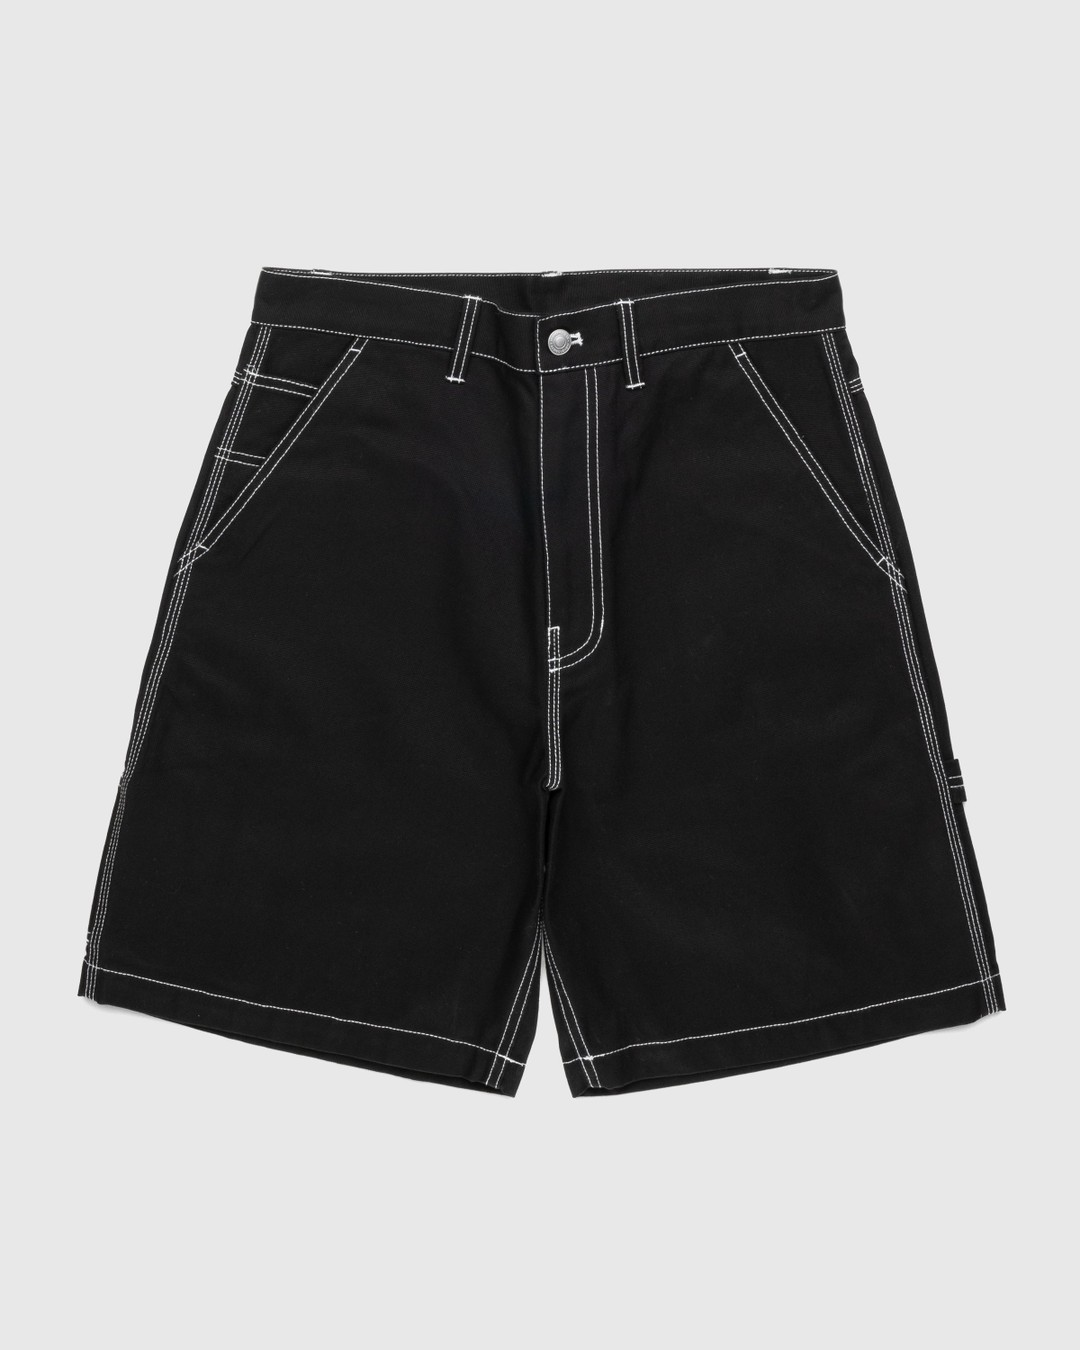 Highsnobiety – Carpenter Shorts Black - Shorts - Black - Image 1